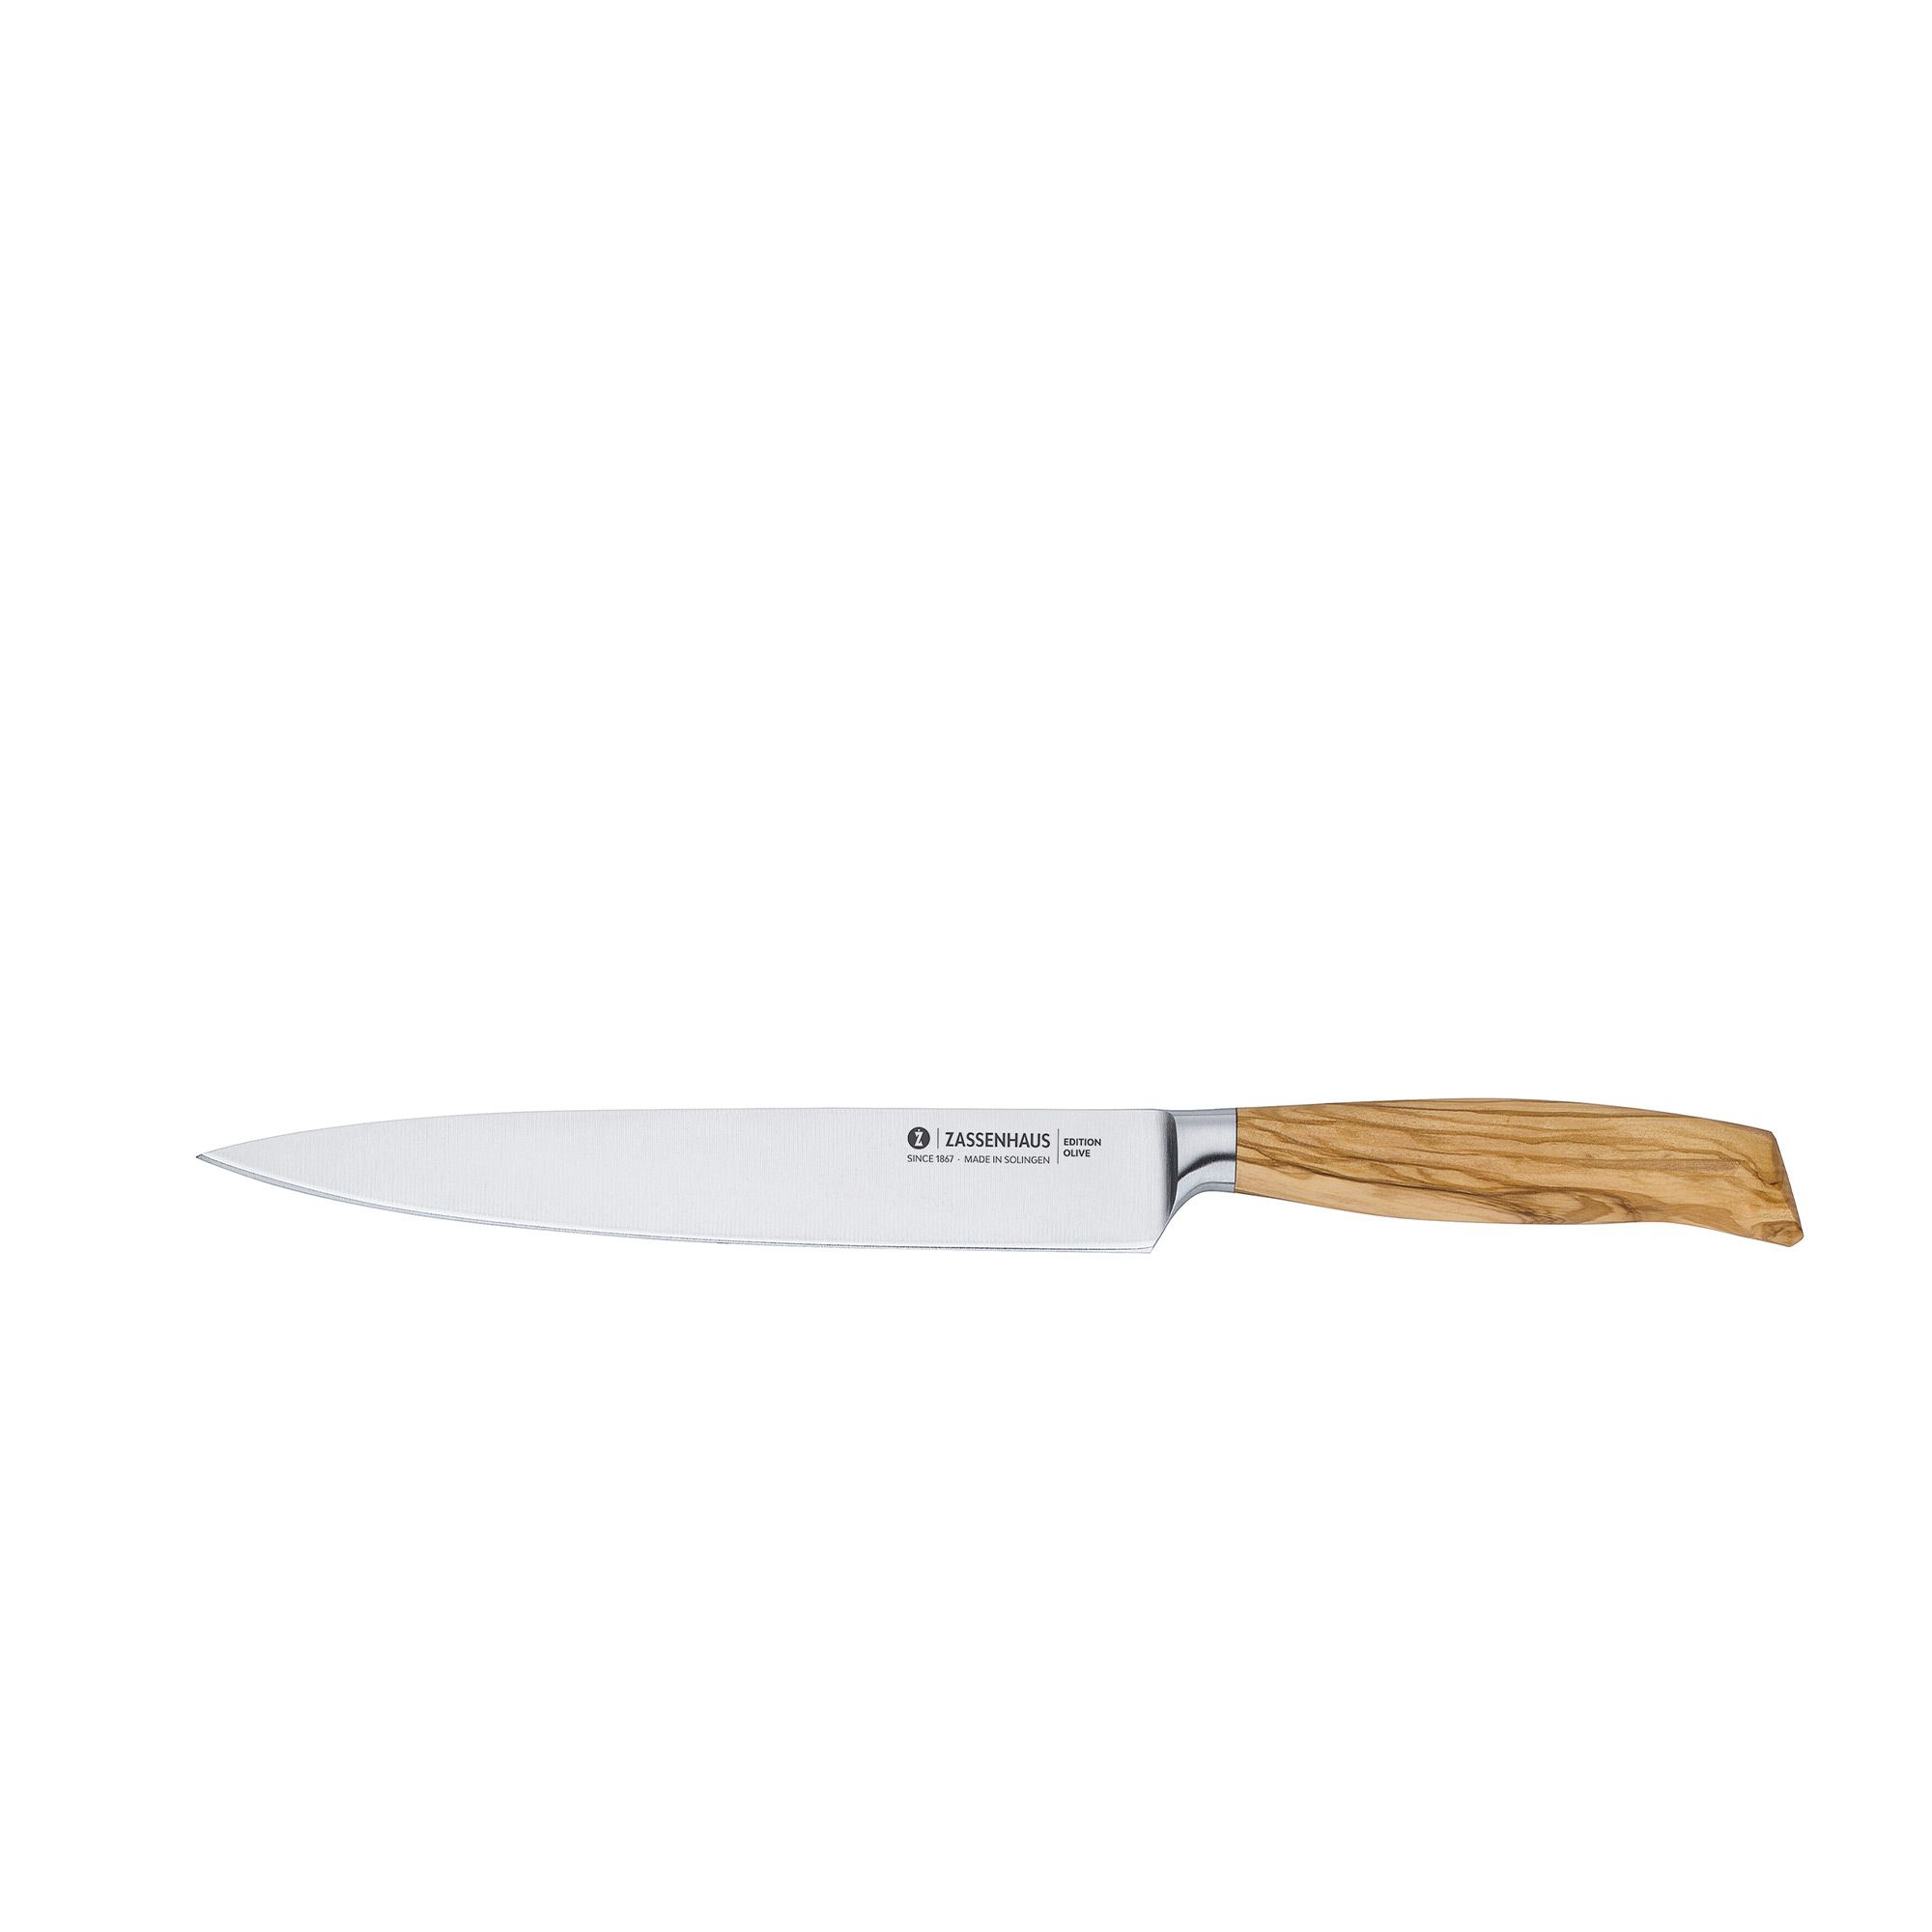 Zassenhaus - ham knife 21 cm - EDITION OLIVE